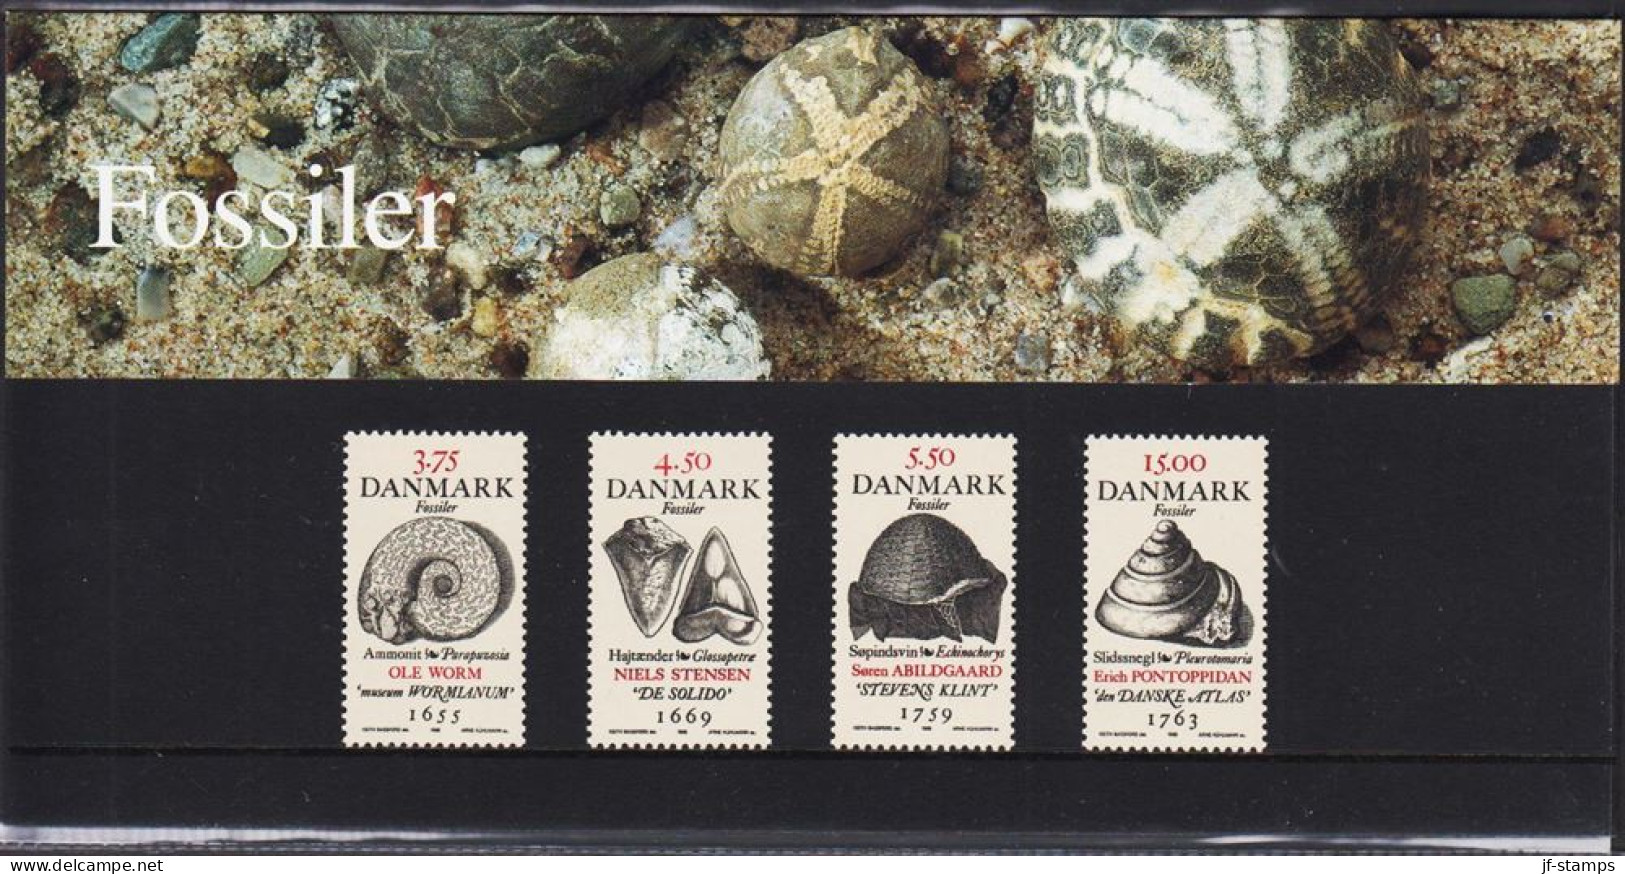 1998. DANMARK. Fossiler Complete Set In Official Folder (SM 32/1998) Never Hinged. (Michel 1195-1198) - JF544449 - Ongebruikt